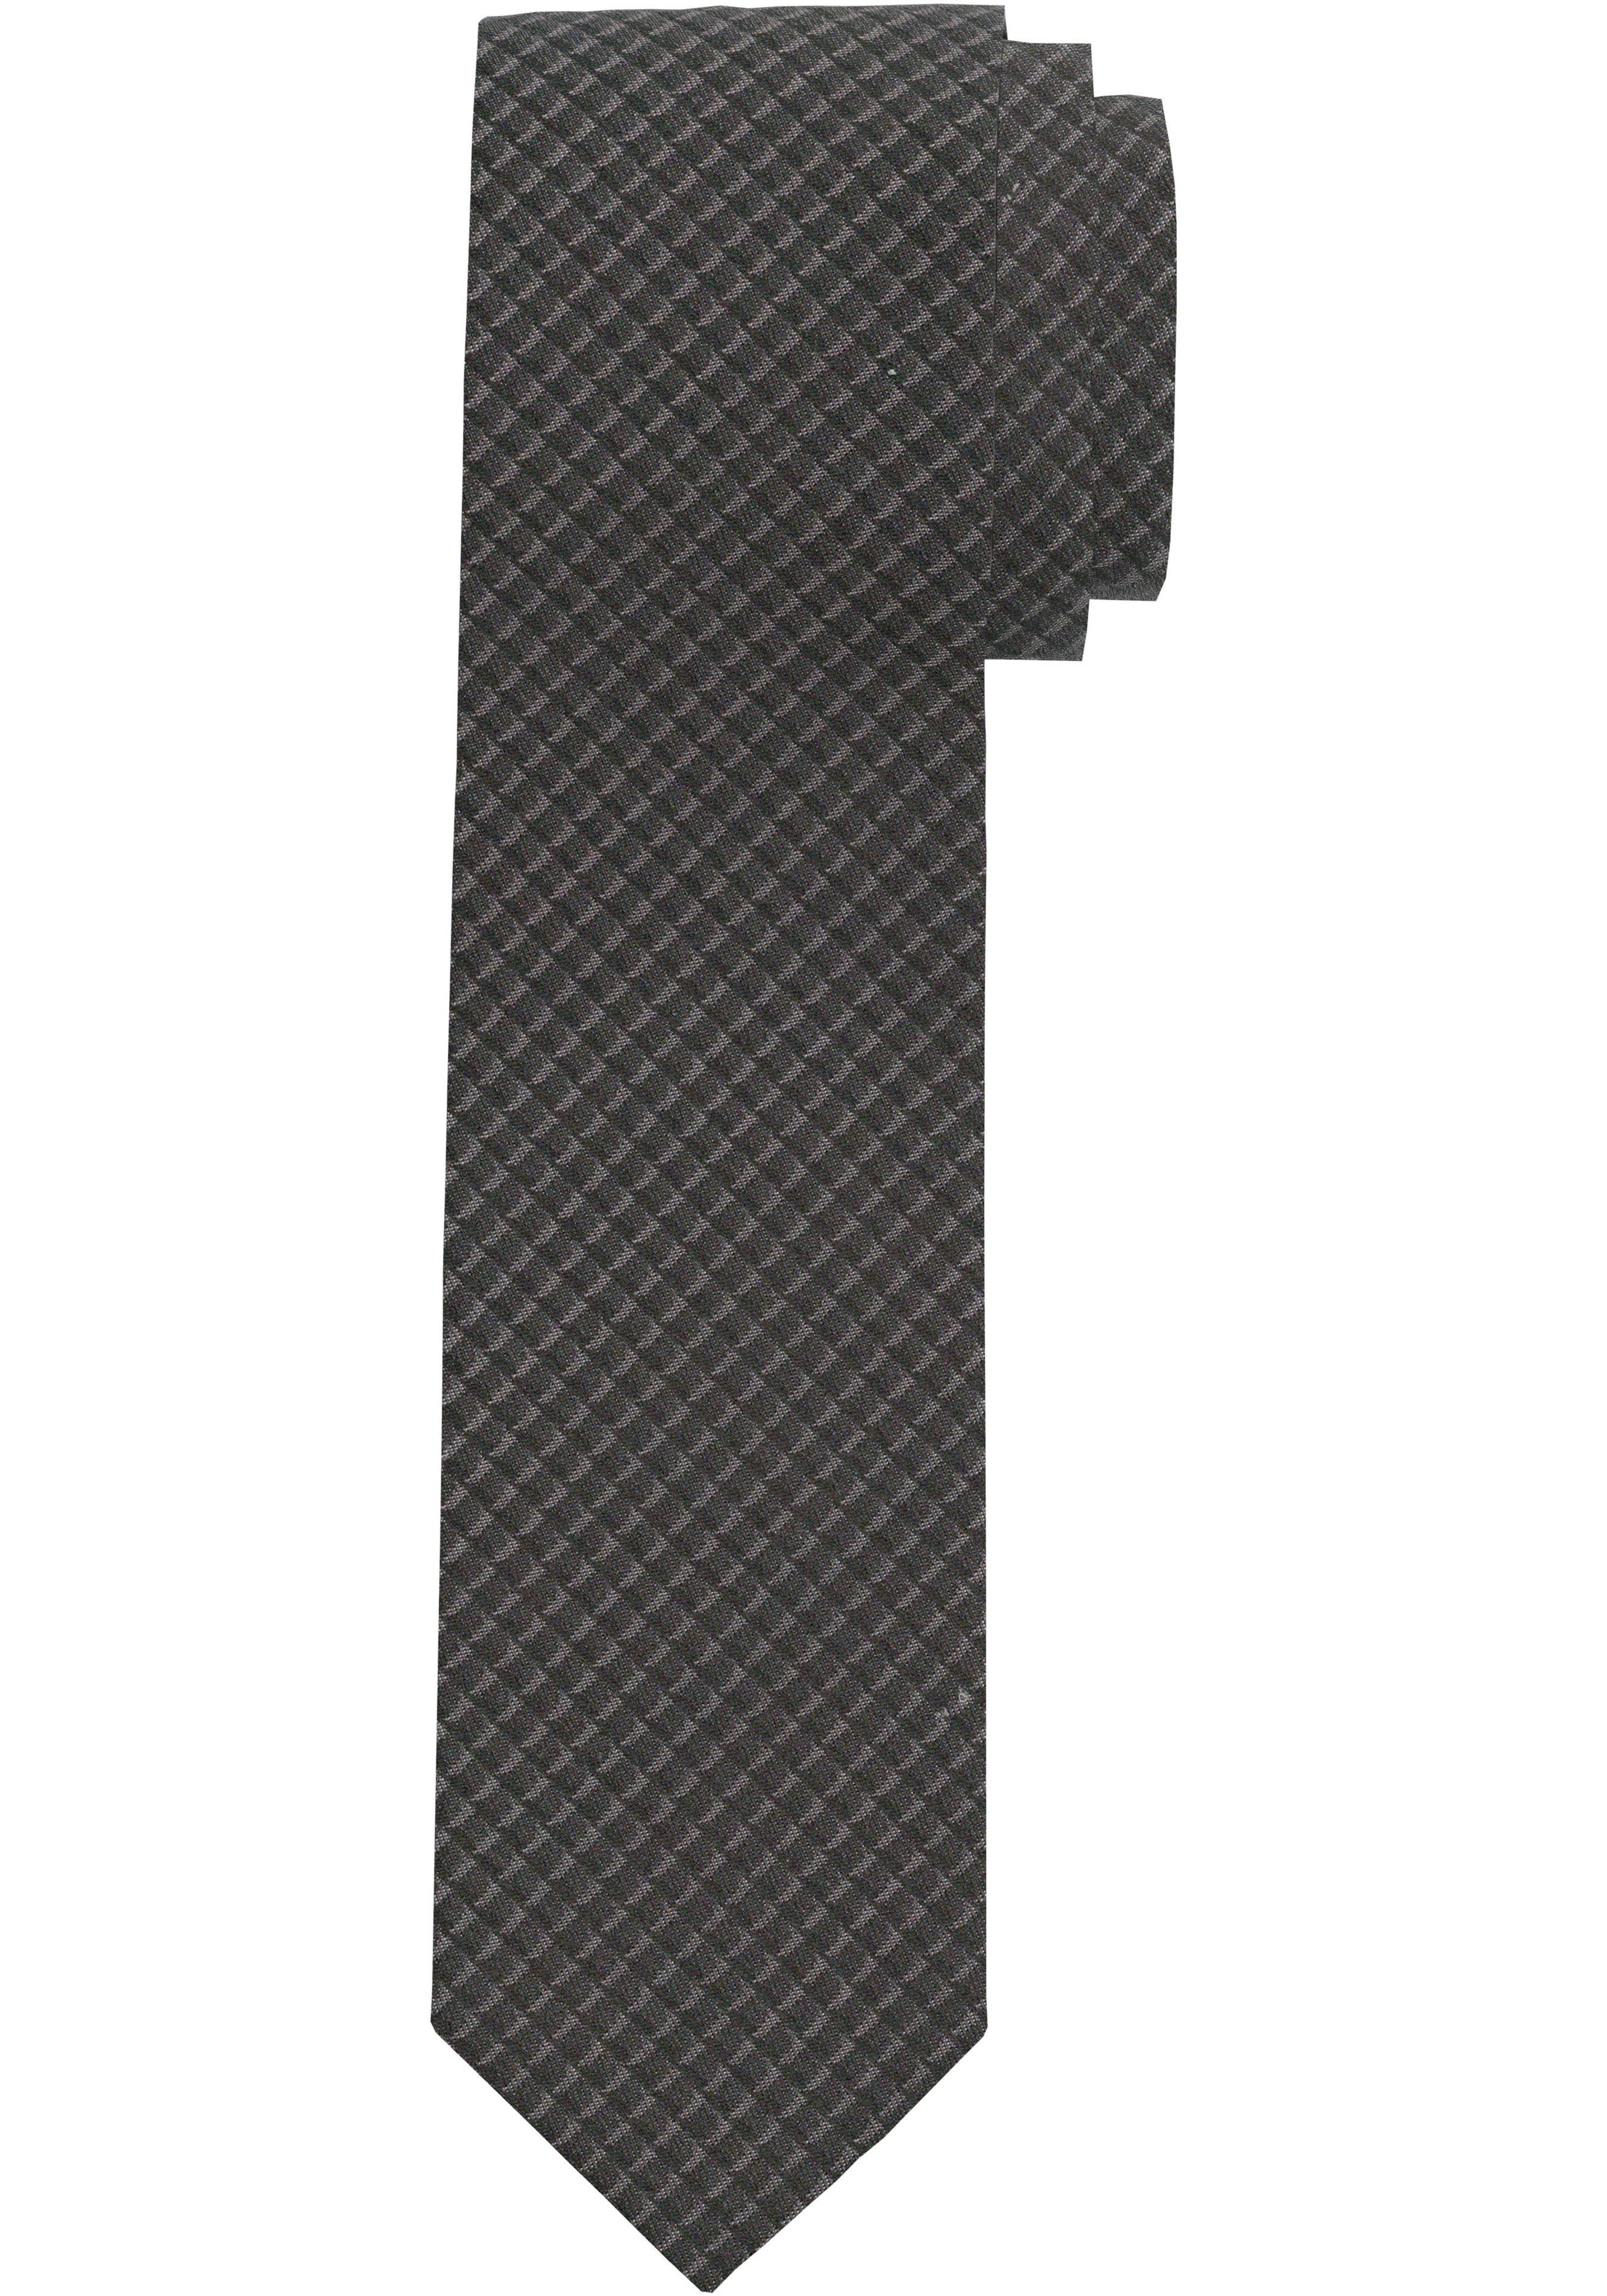 OLYMP Krawatte mit Krawatte Strukturmuster